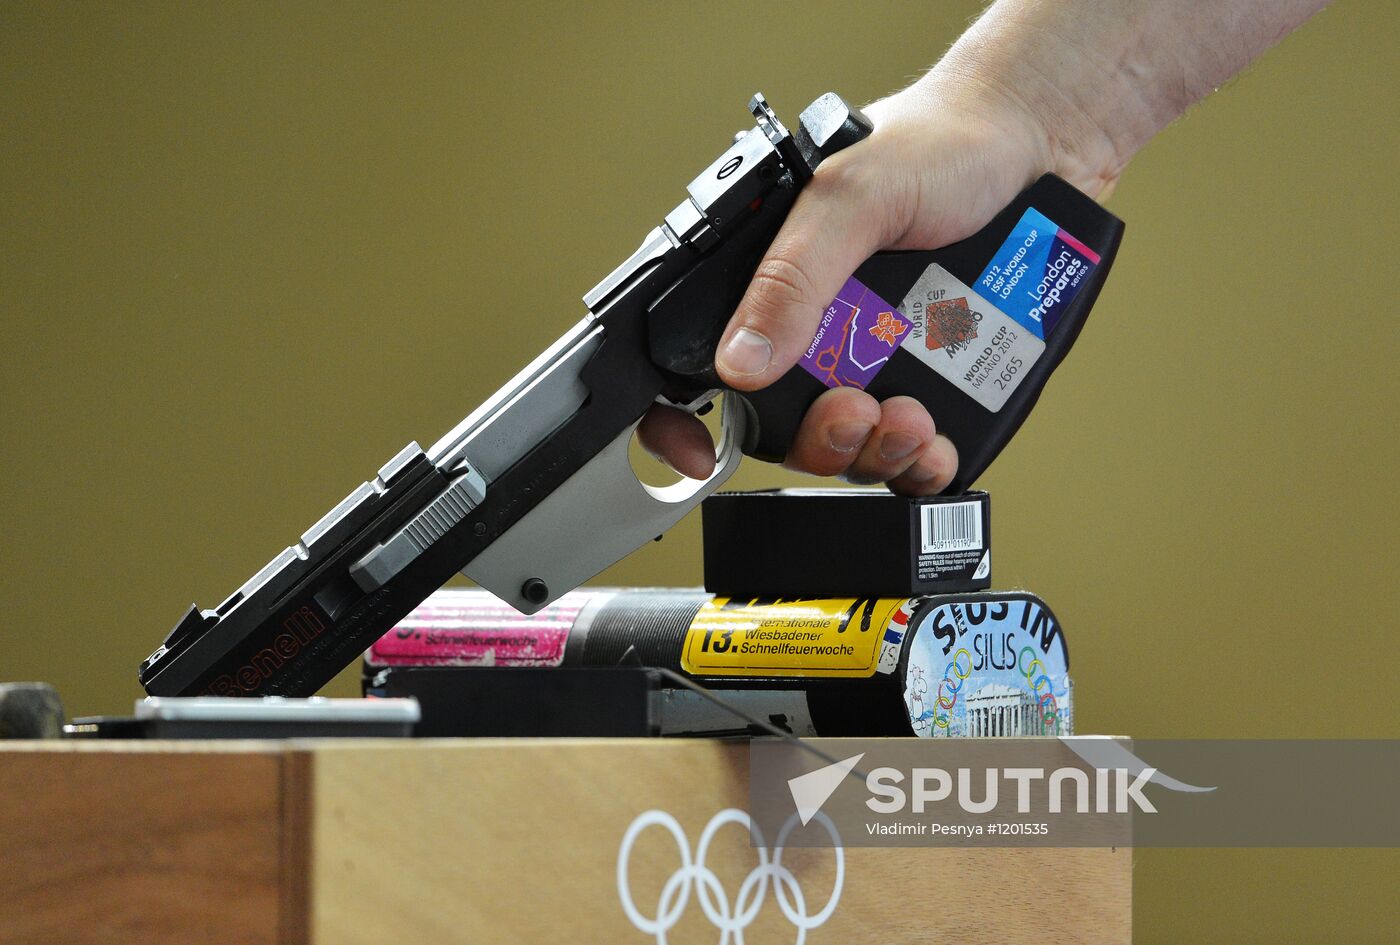 2012 Olympics. Men's Rapid Fire Pistol